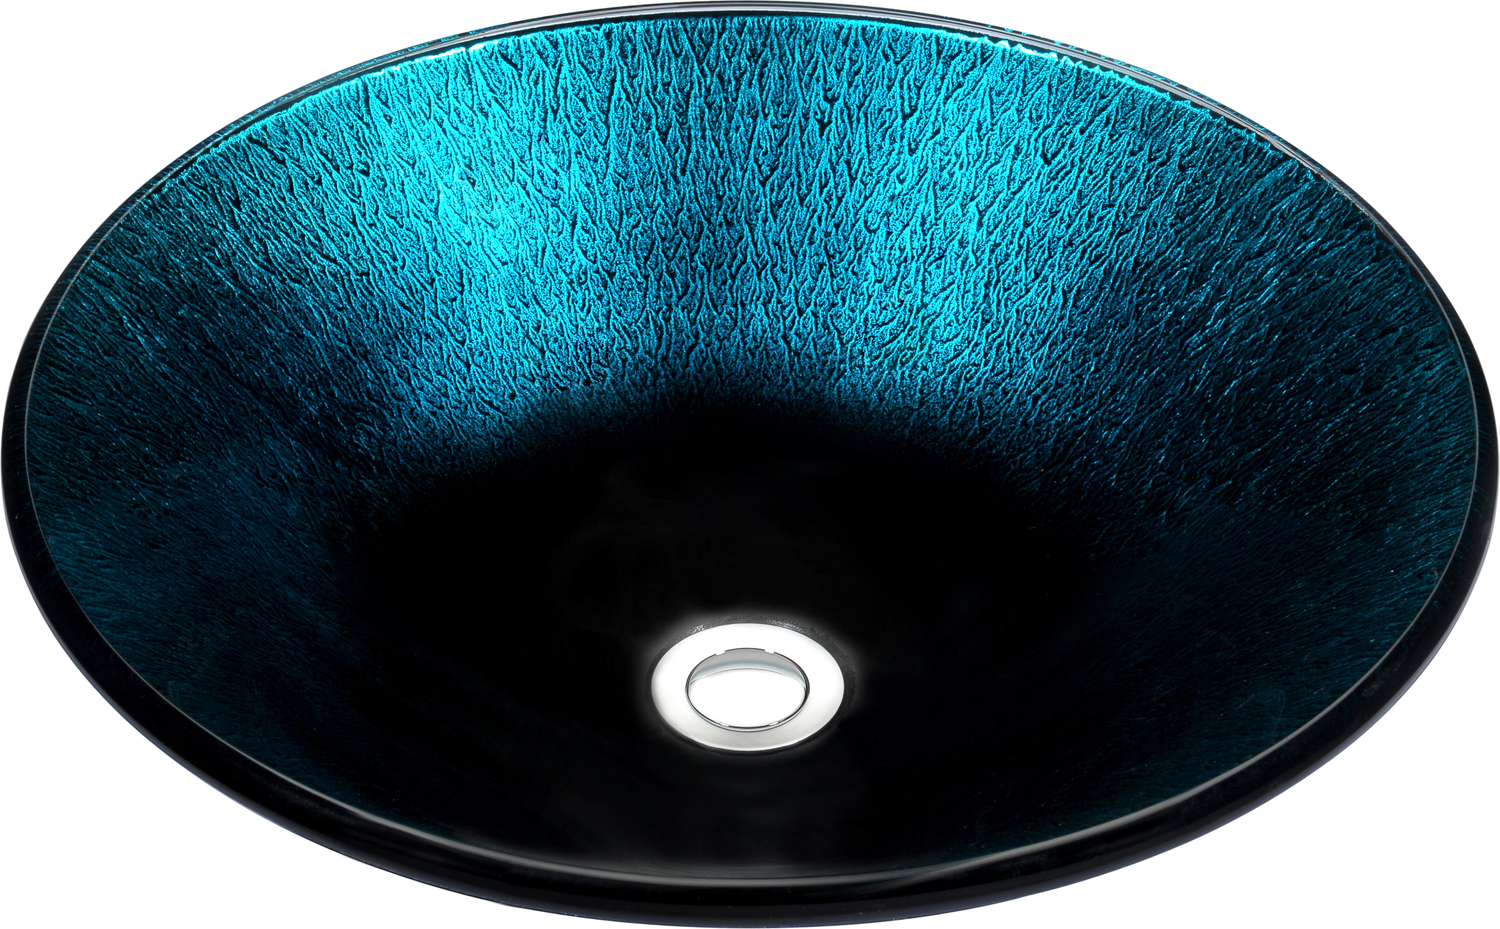 under sink white cabinet Anzzi BATHROOM - Sinks - Vessel - Tempered Glass Blue